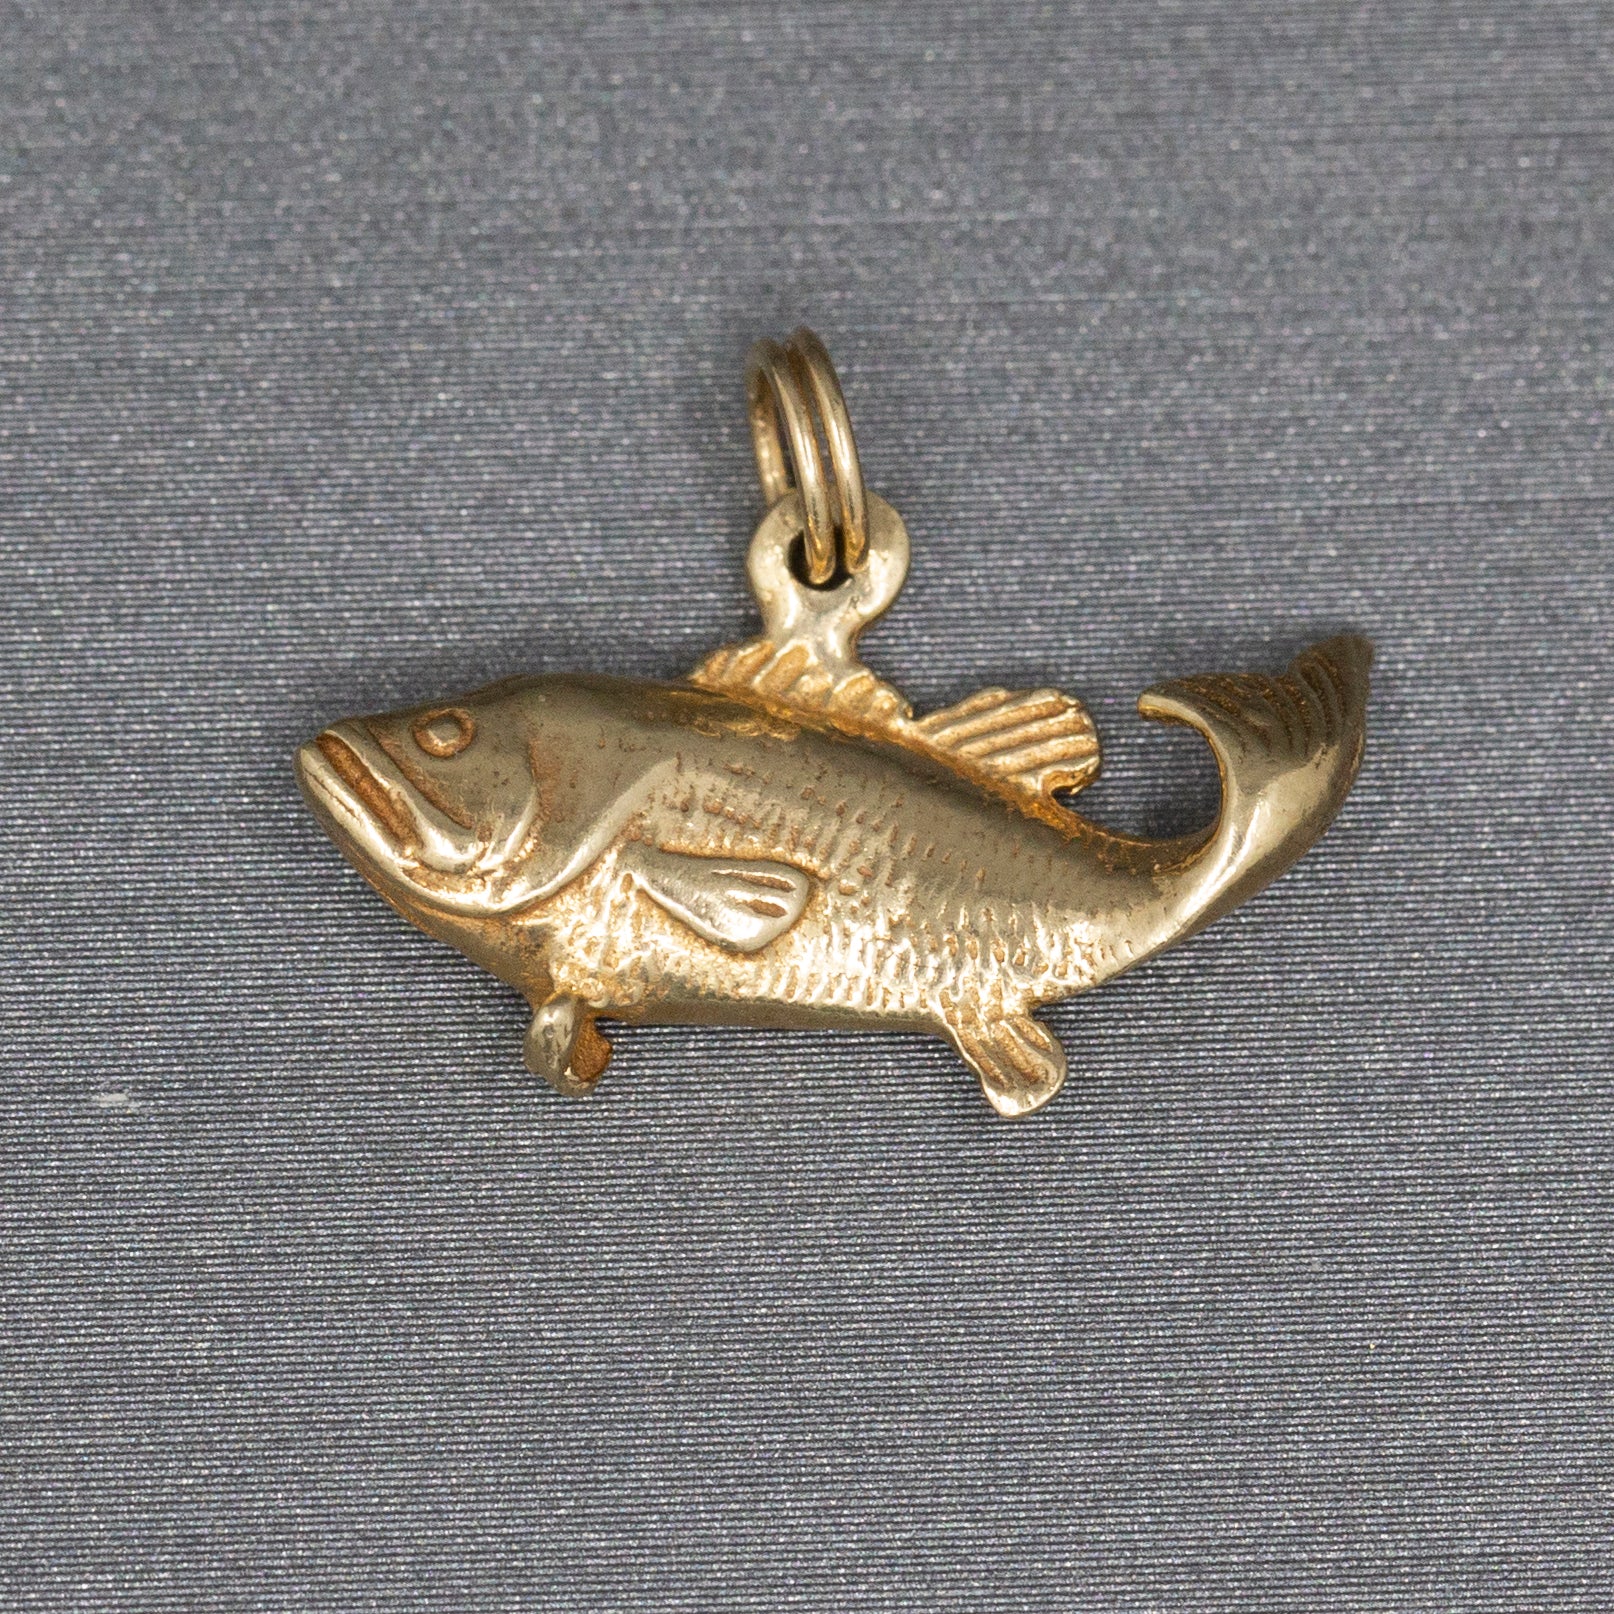 Swimming Salmon Fish Charm in 14k Yellow Gold